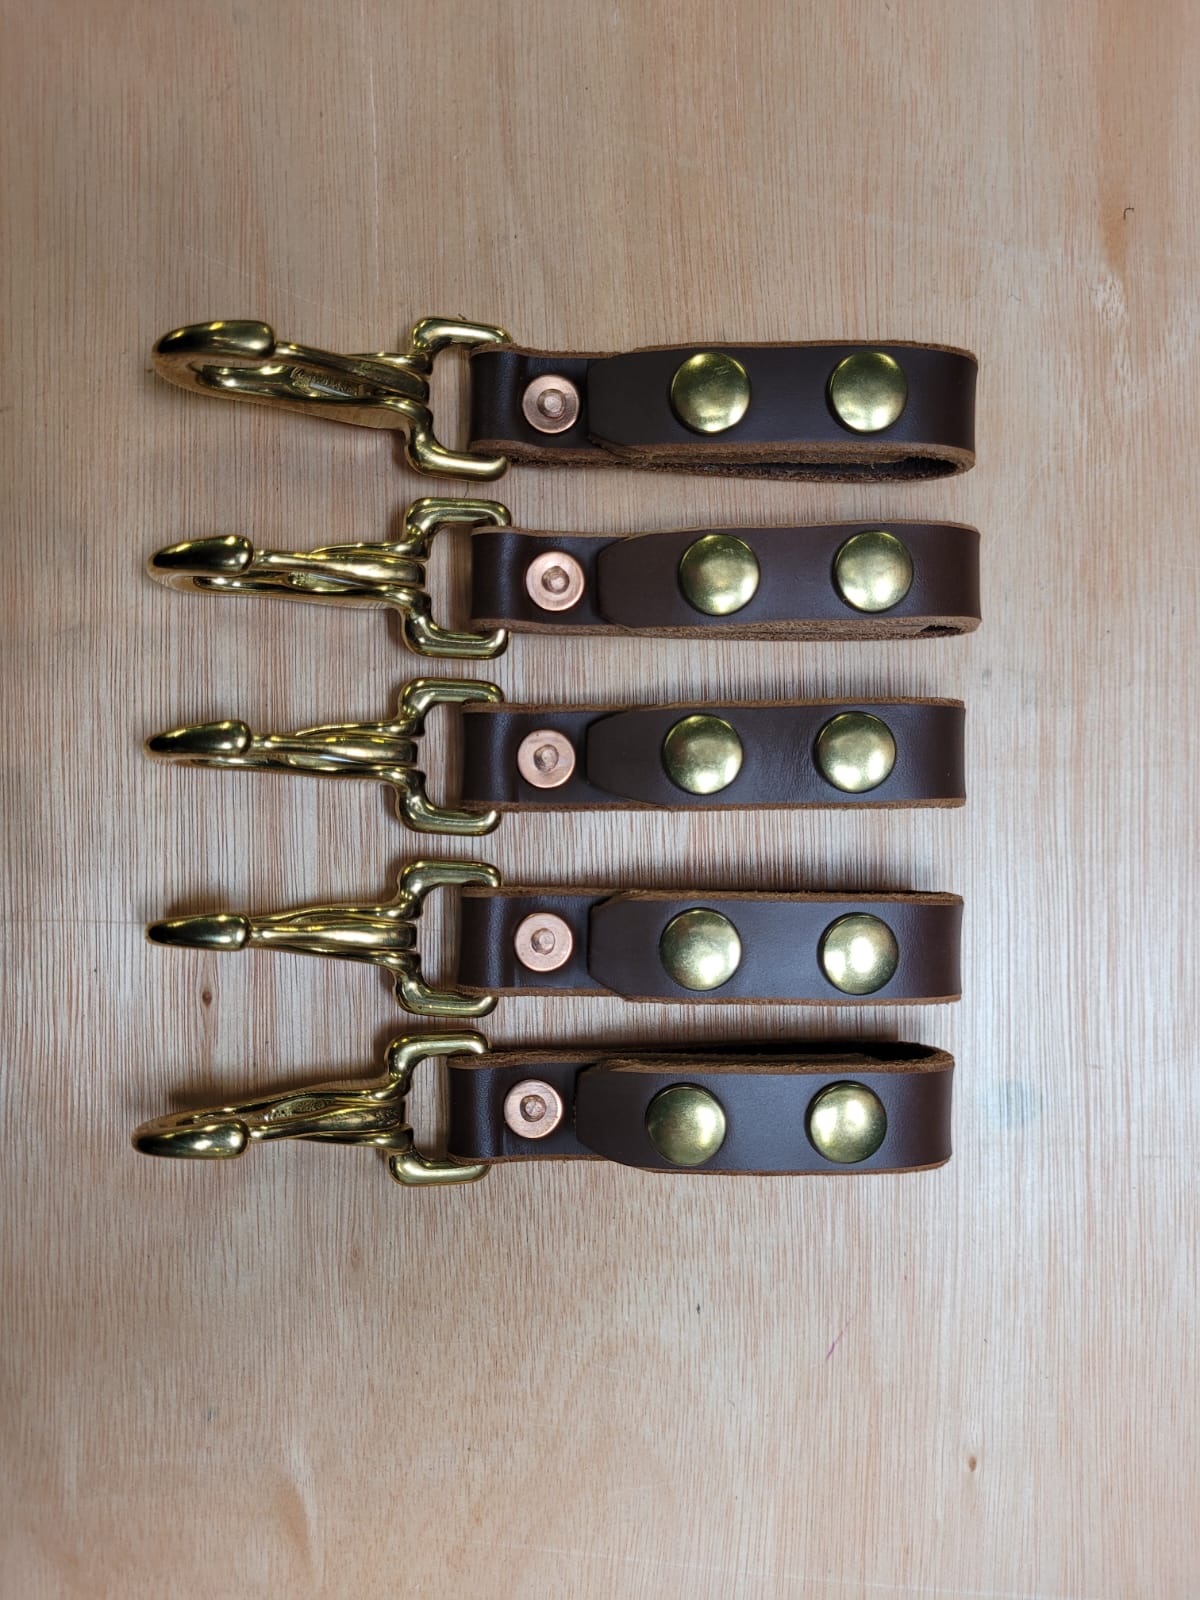 Leather key belt keepers for storing your keys safely on your belt